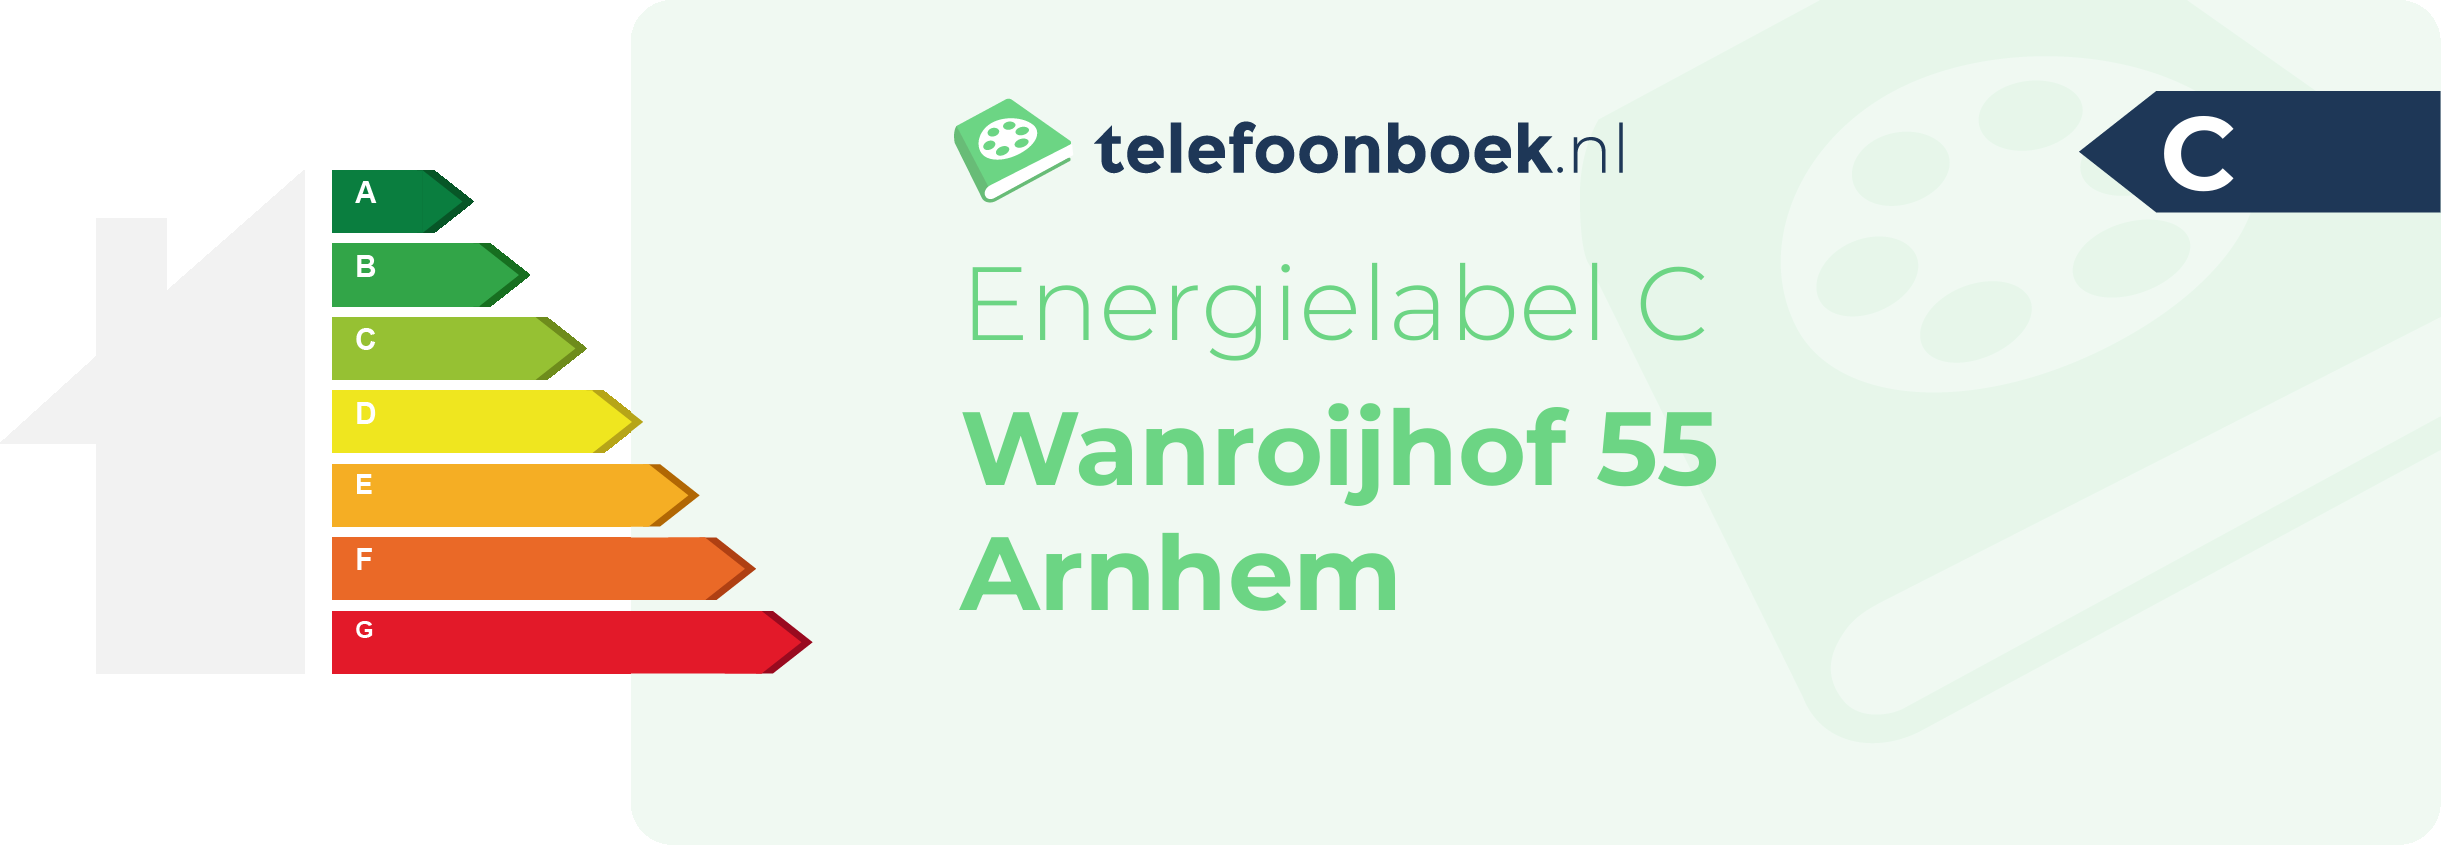 Energielabel Wanroijhof 55 Arnhem